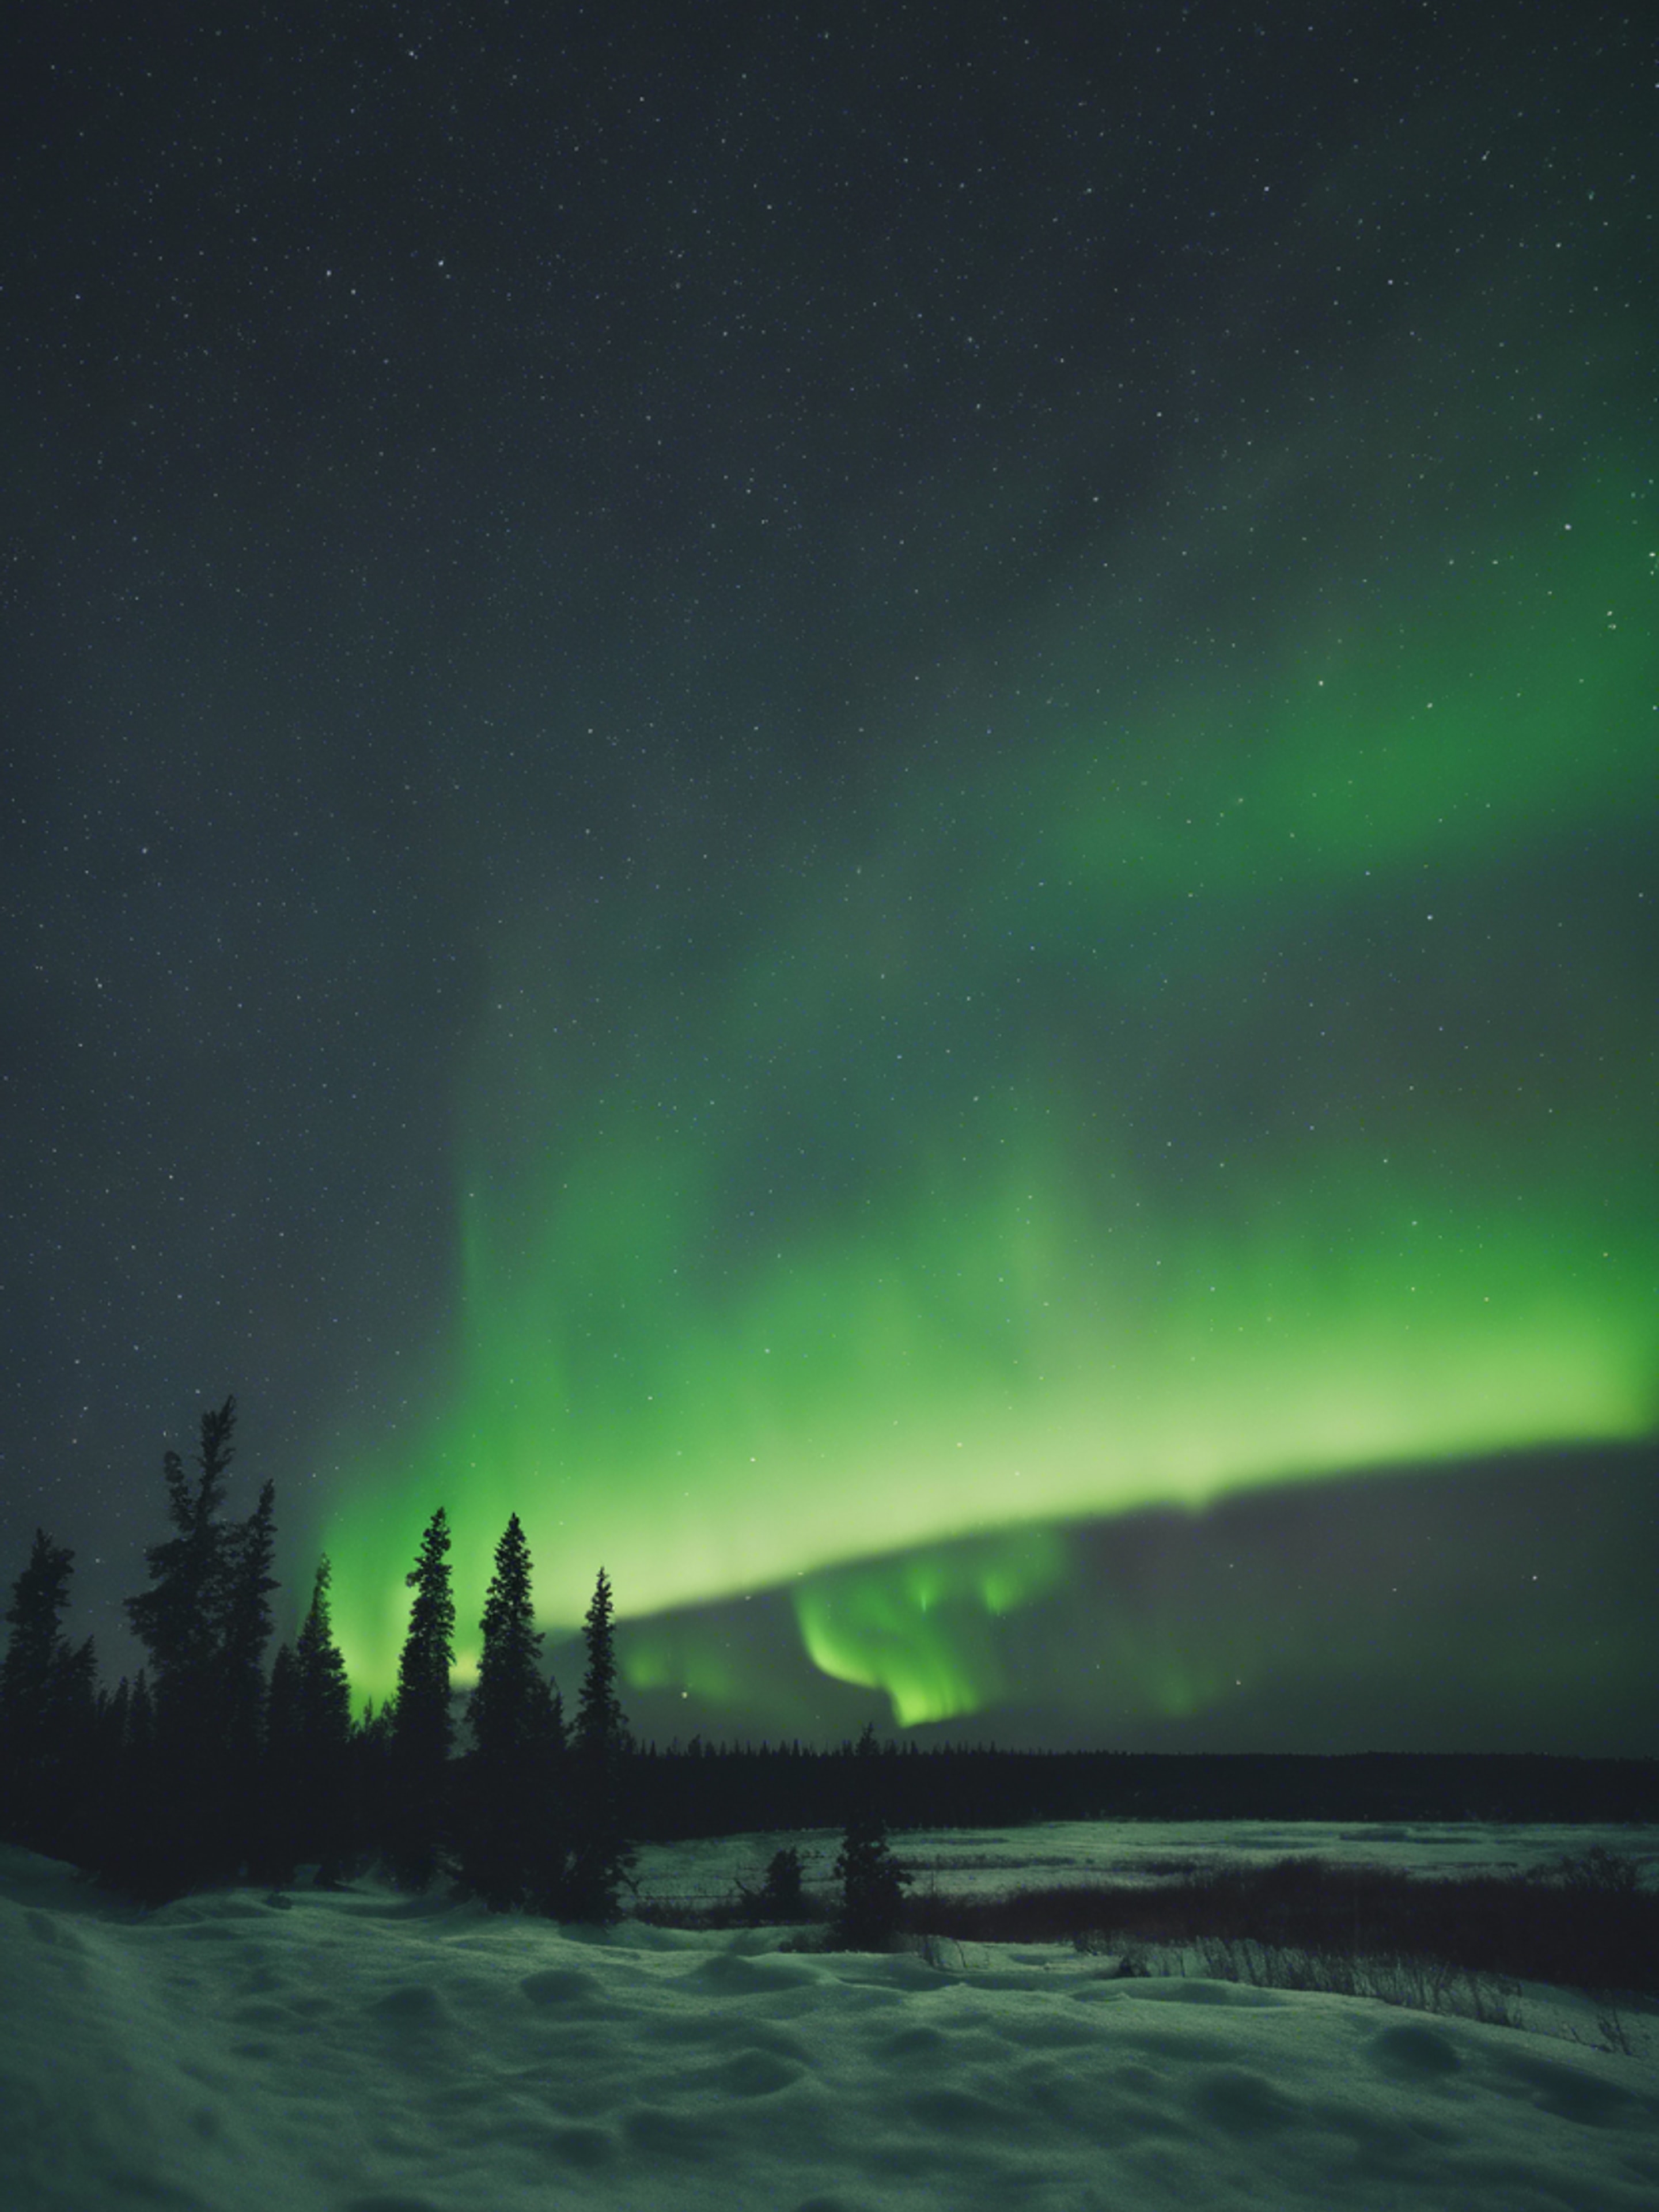 A swath of dark green northern lights dancing in the night sky. Behang[3dc0172f99594e7eaaa9]